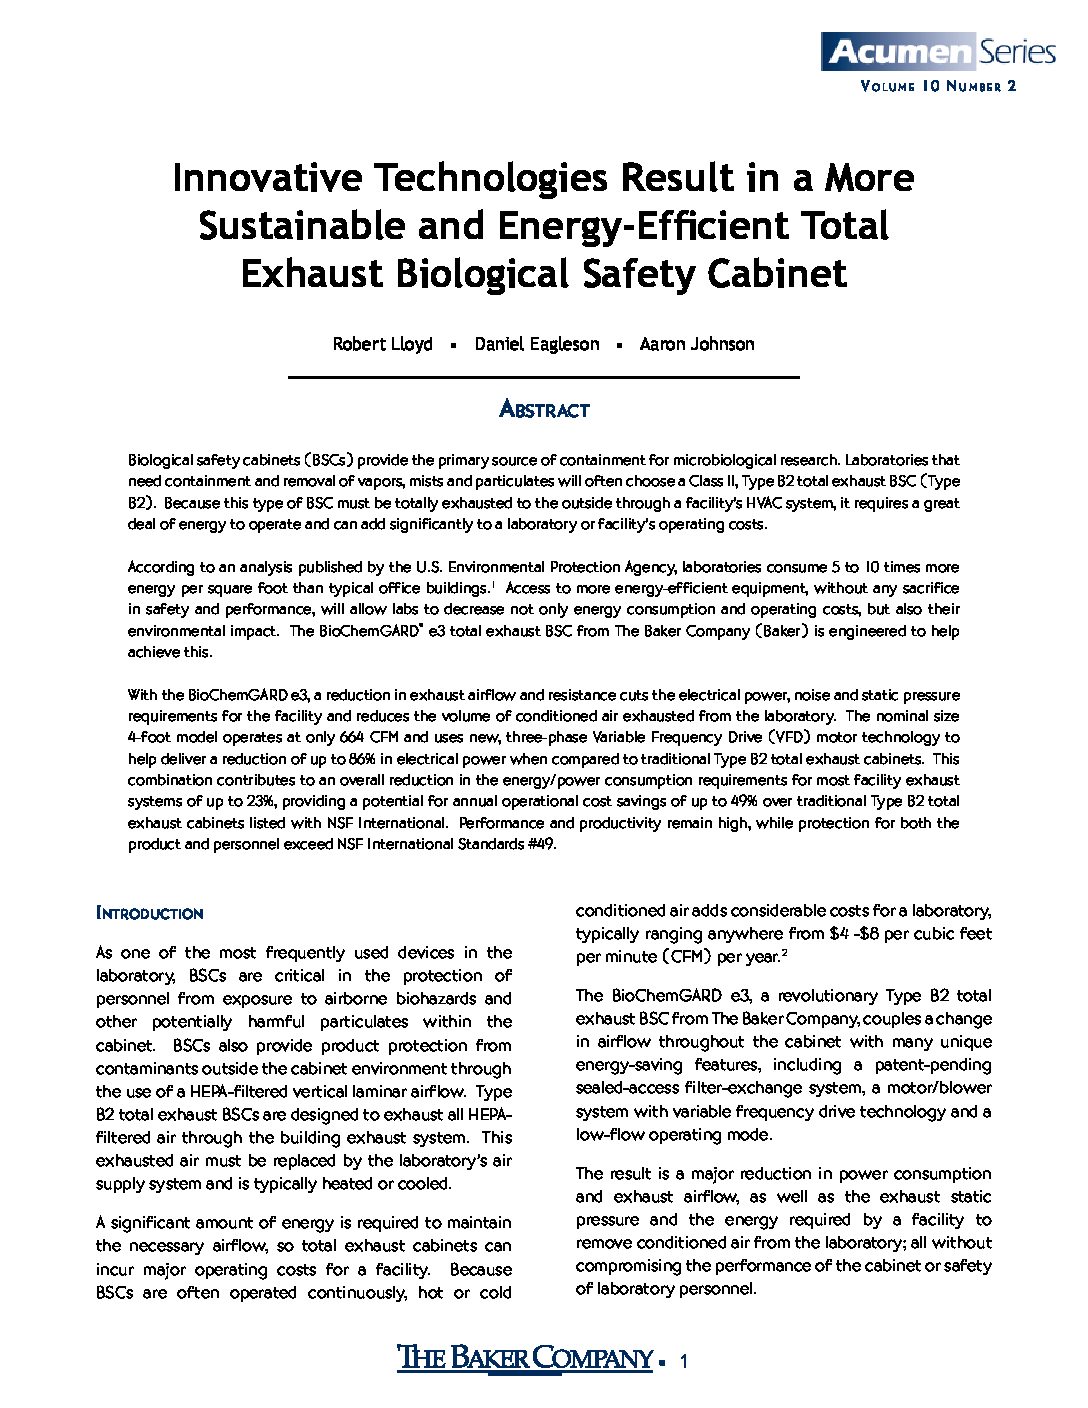 Energy-Efficient-Class-II-B2-BSC-Biochemgard